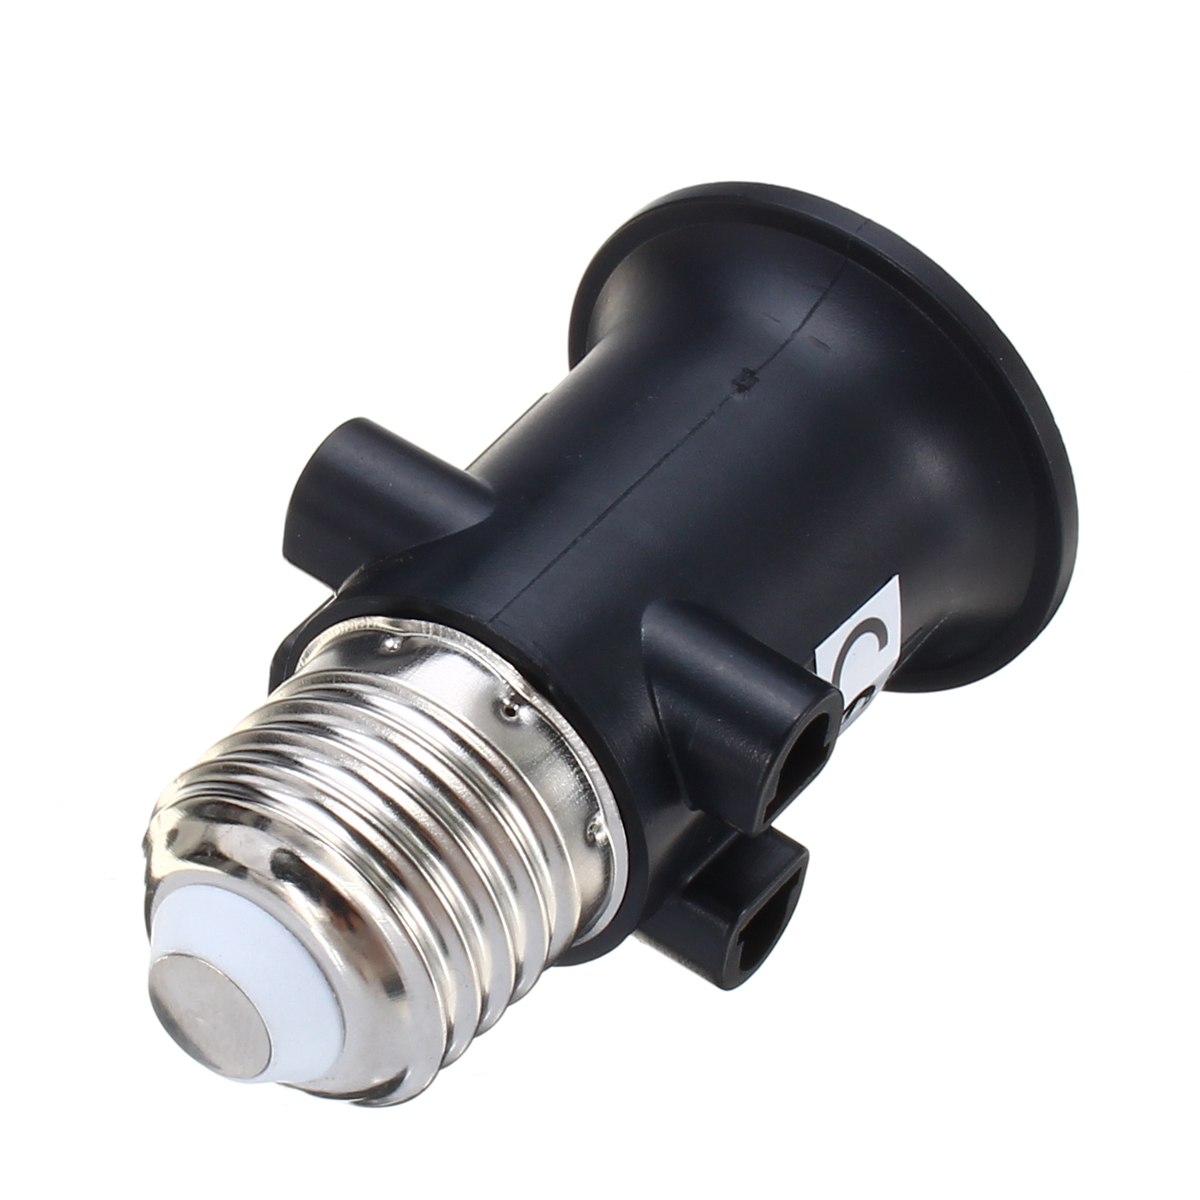 

AC100-240V 4A PBT Fireproof E27 Bulb Adapter Lamp Holder Base Socket with EU Plug